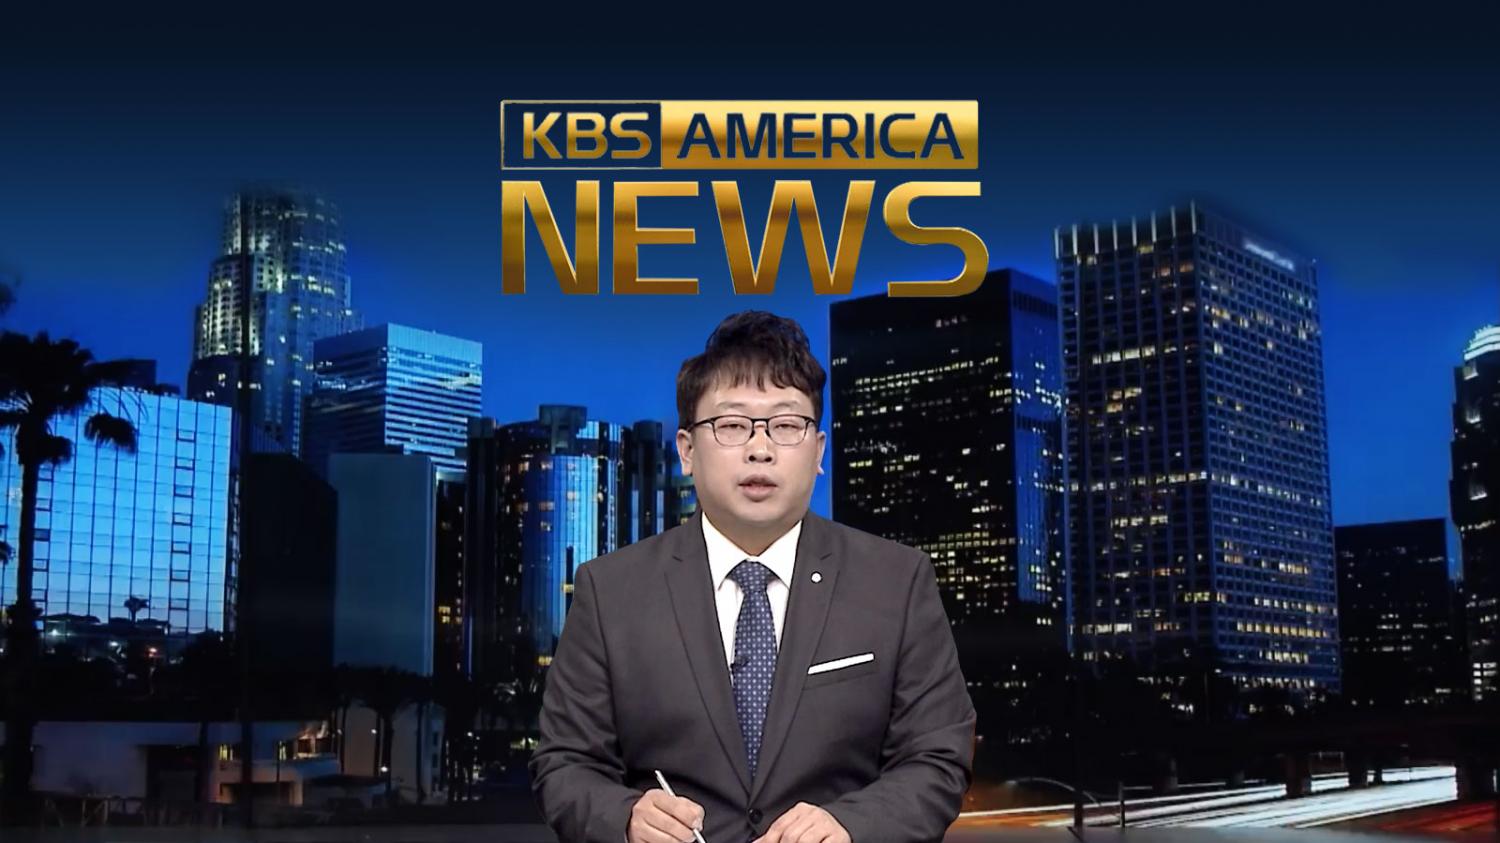 KBS America News